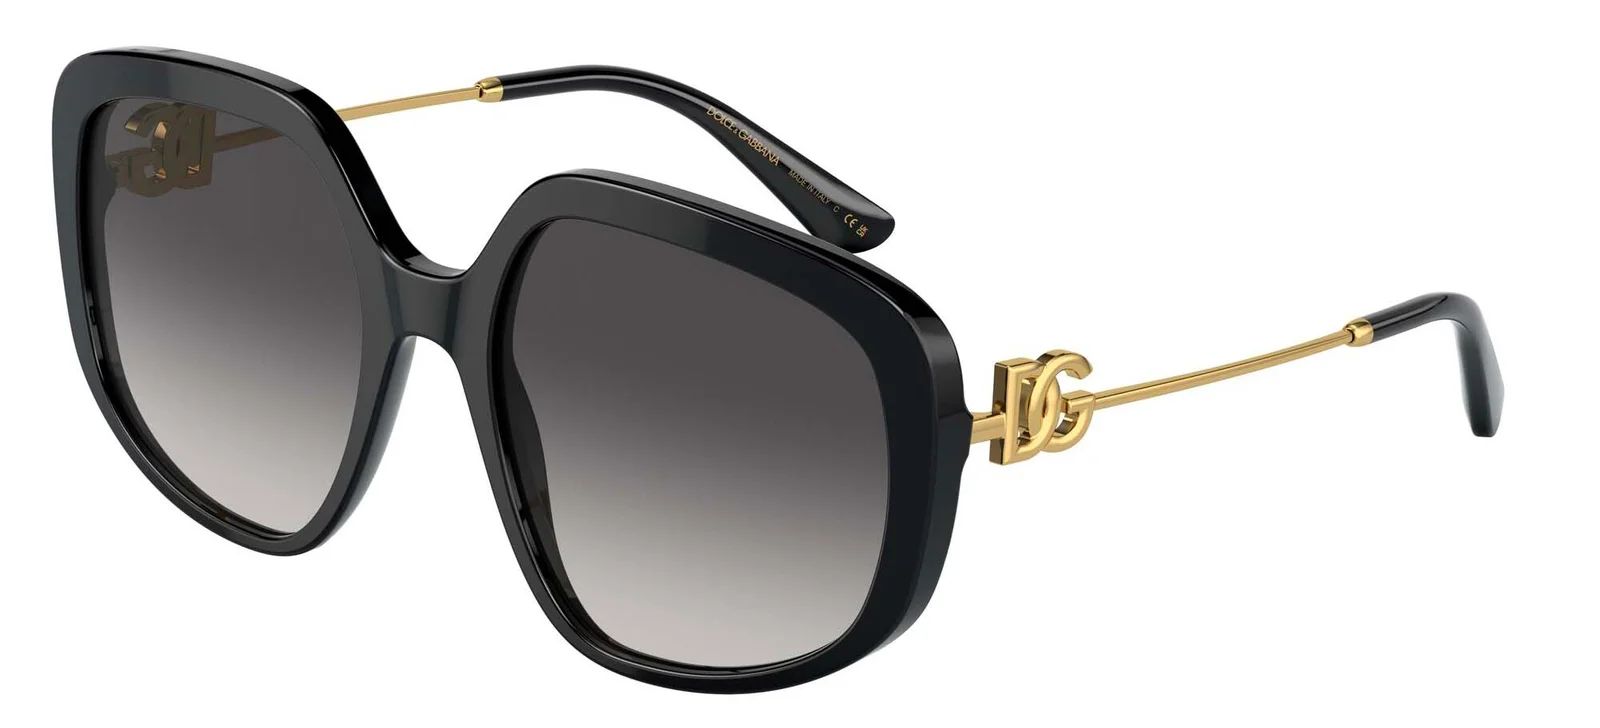 Dolce & Gabbana Eyewear Butterfly Frame Sunglasses | Cettire Global